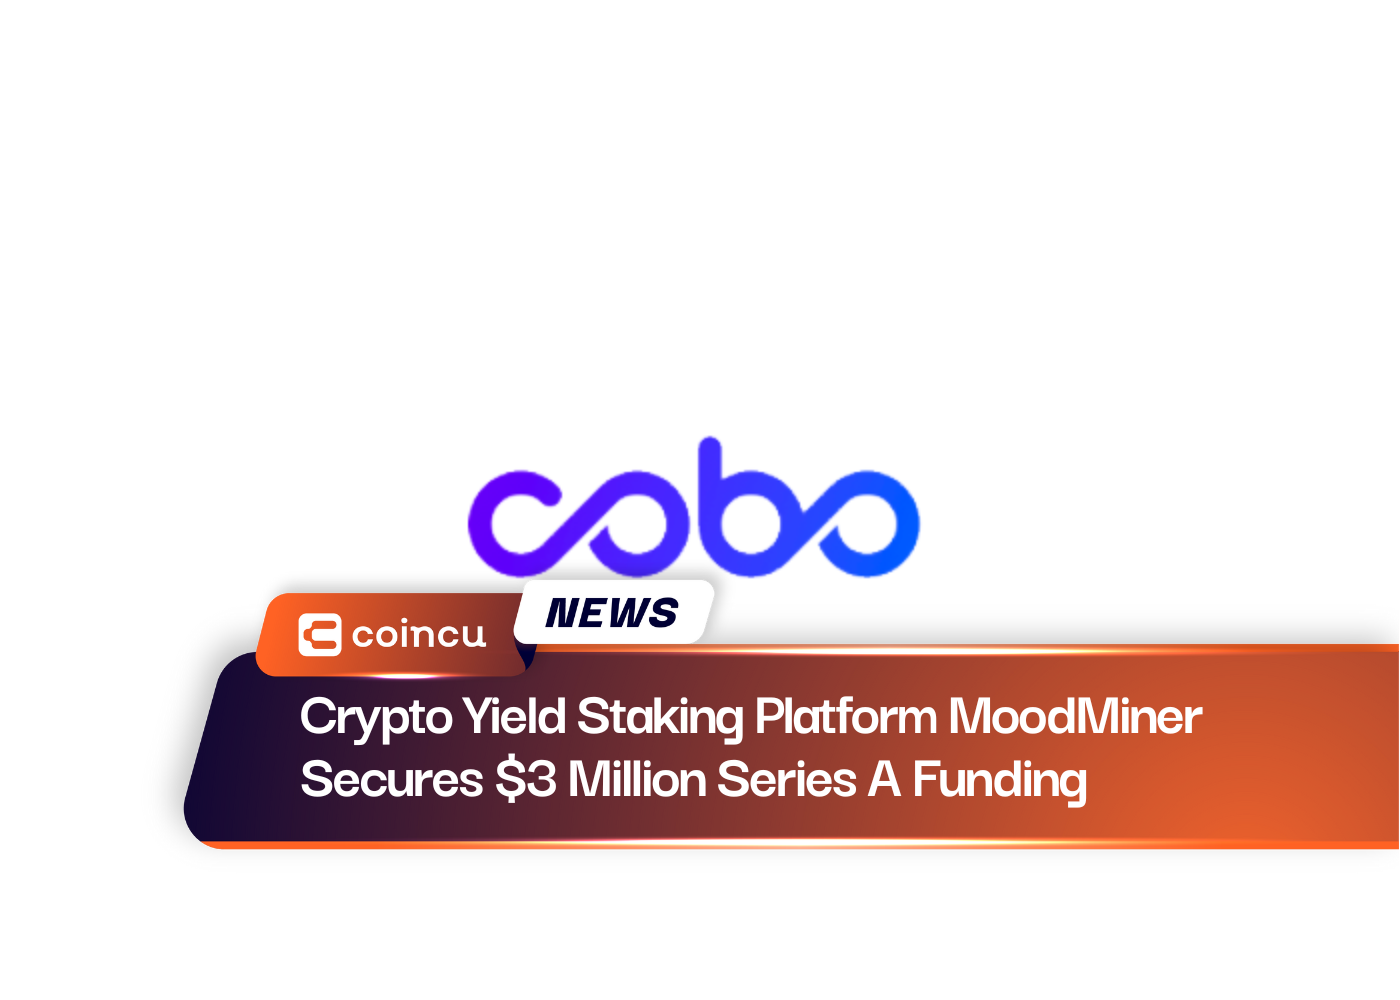 What Specifically Helps Cobo SuperLoop Rebuild The New Trust In Exchanges?